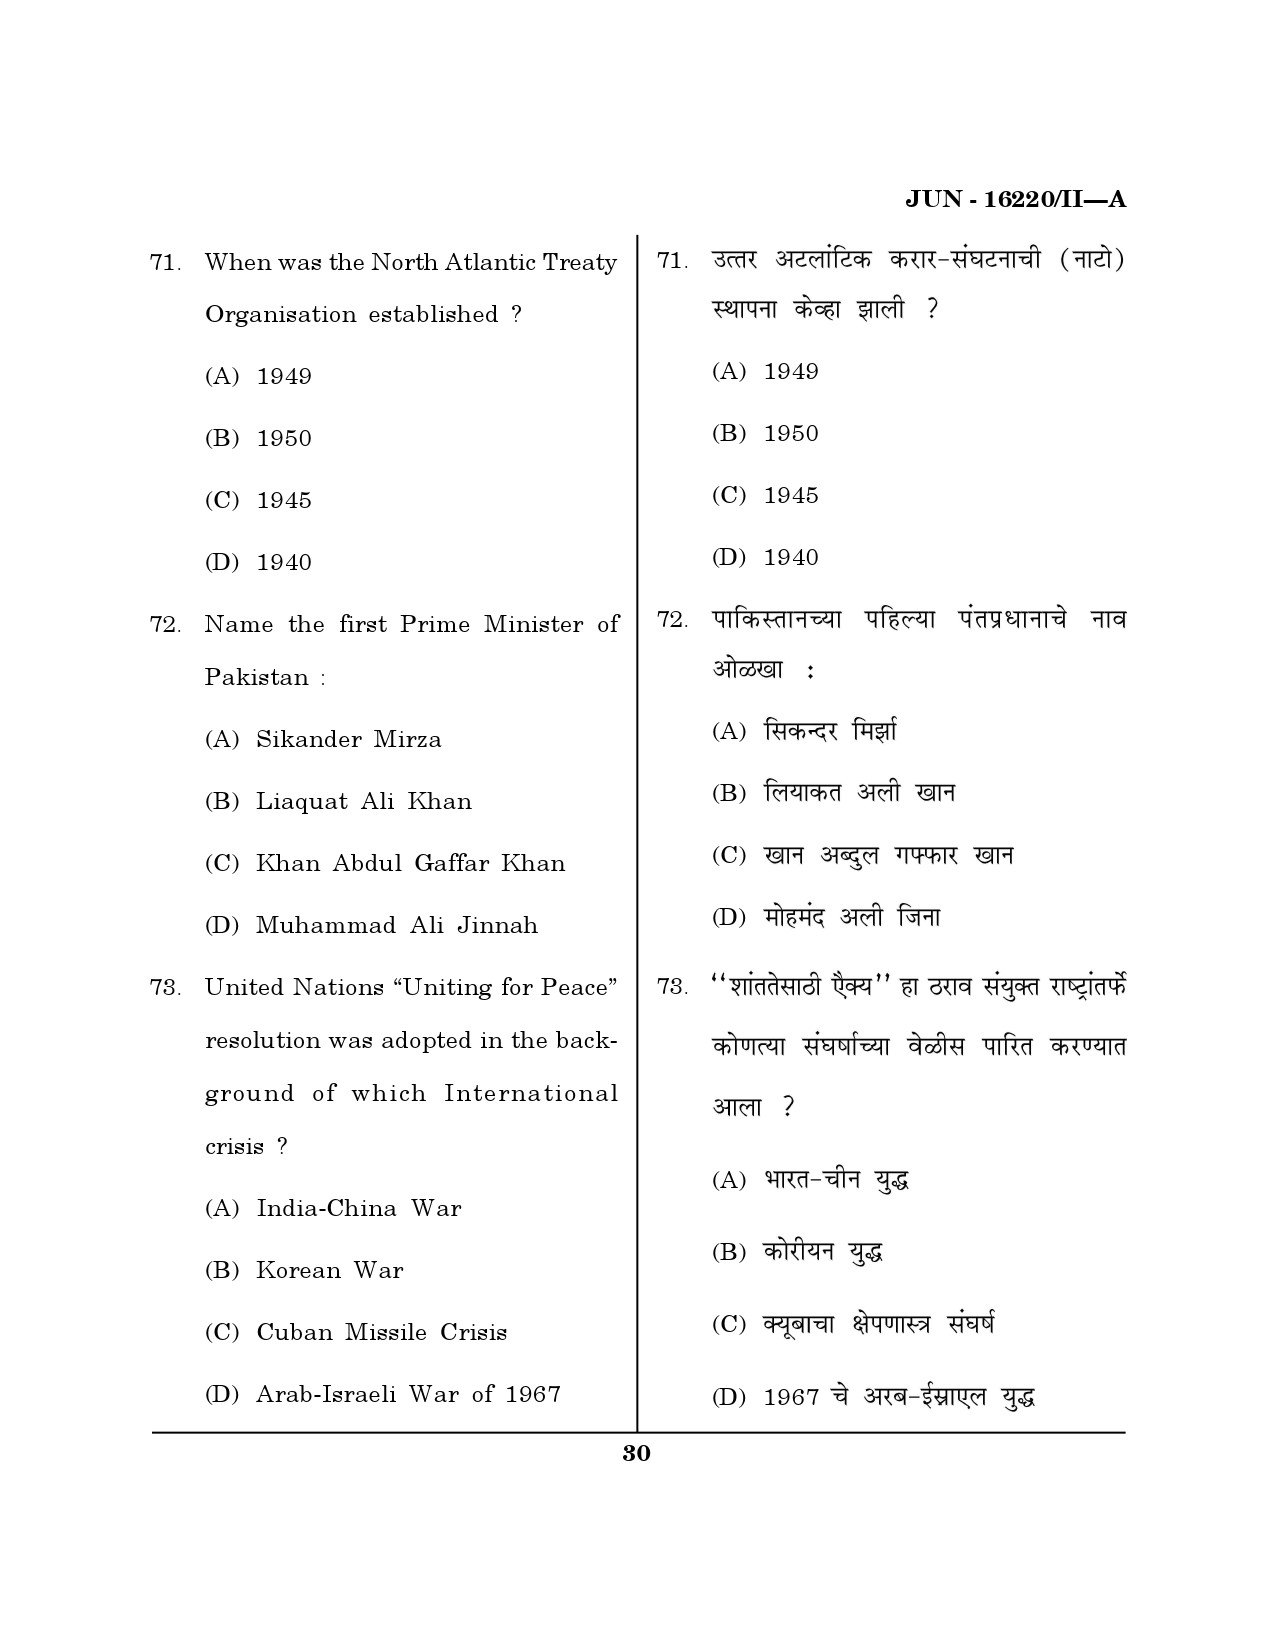 Maharashtra SET Defence and Strategic Studies Question Paper II June 2020 29